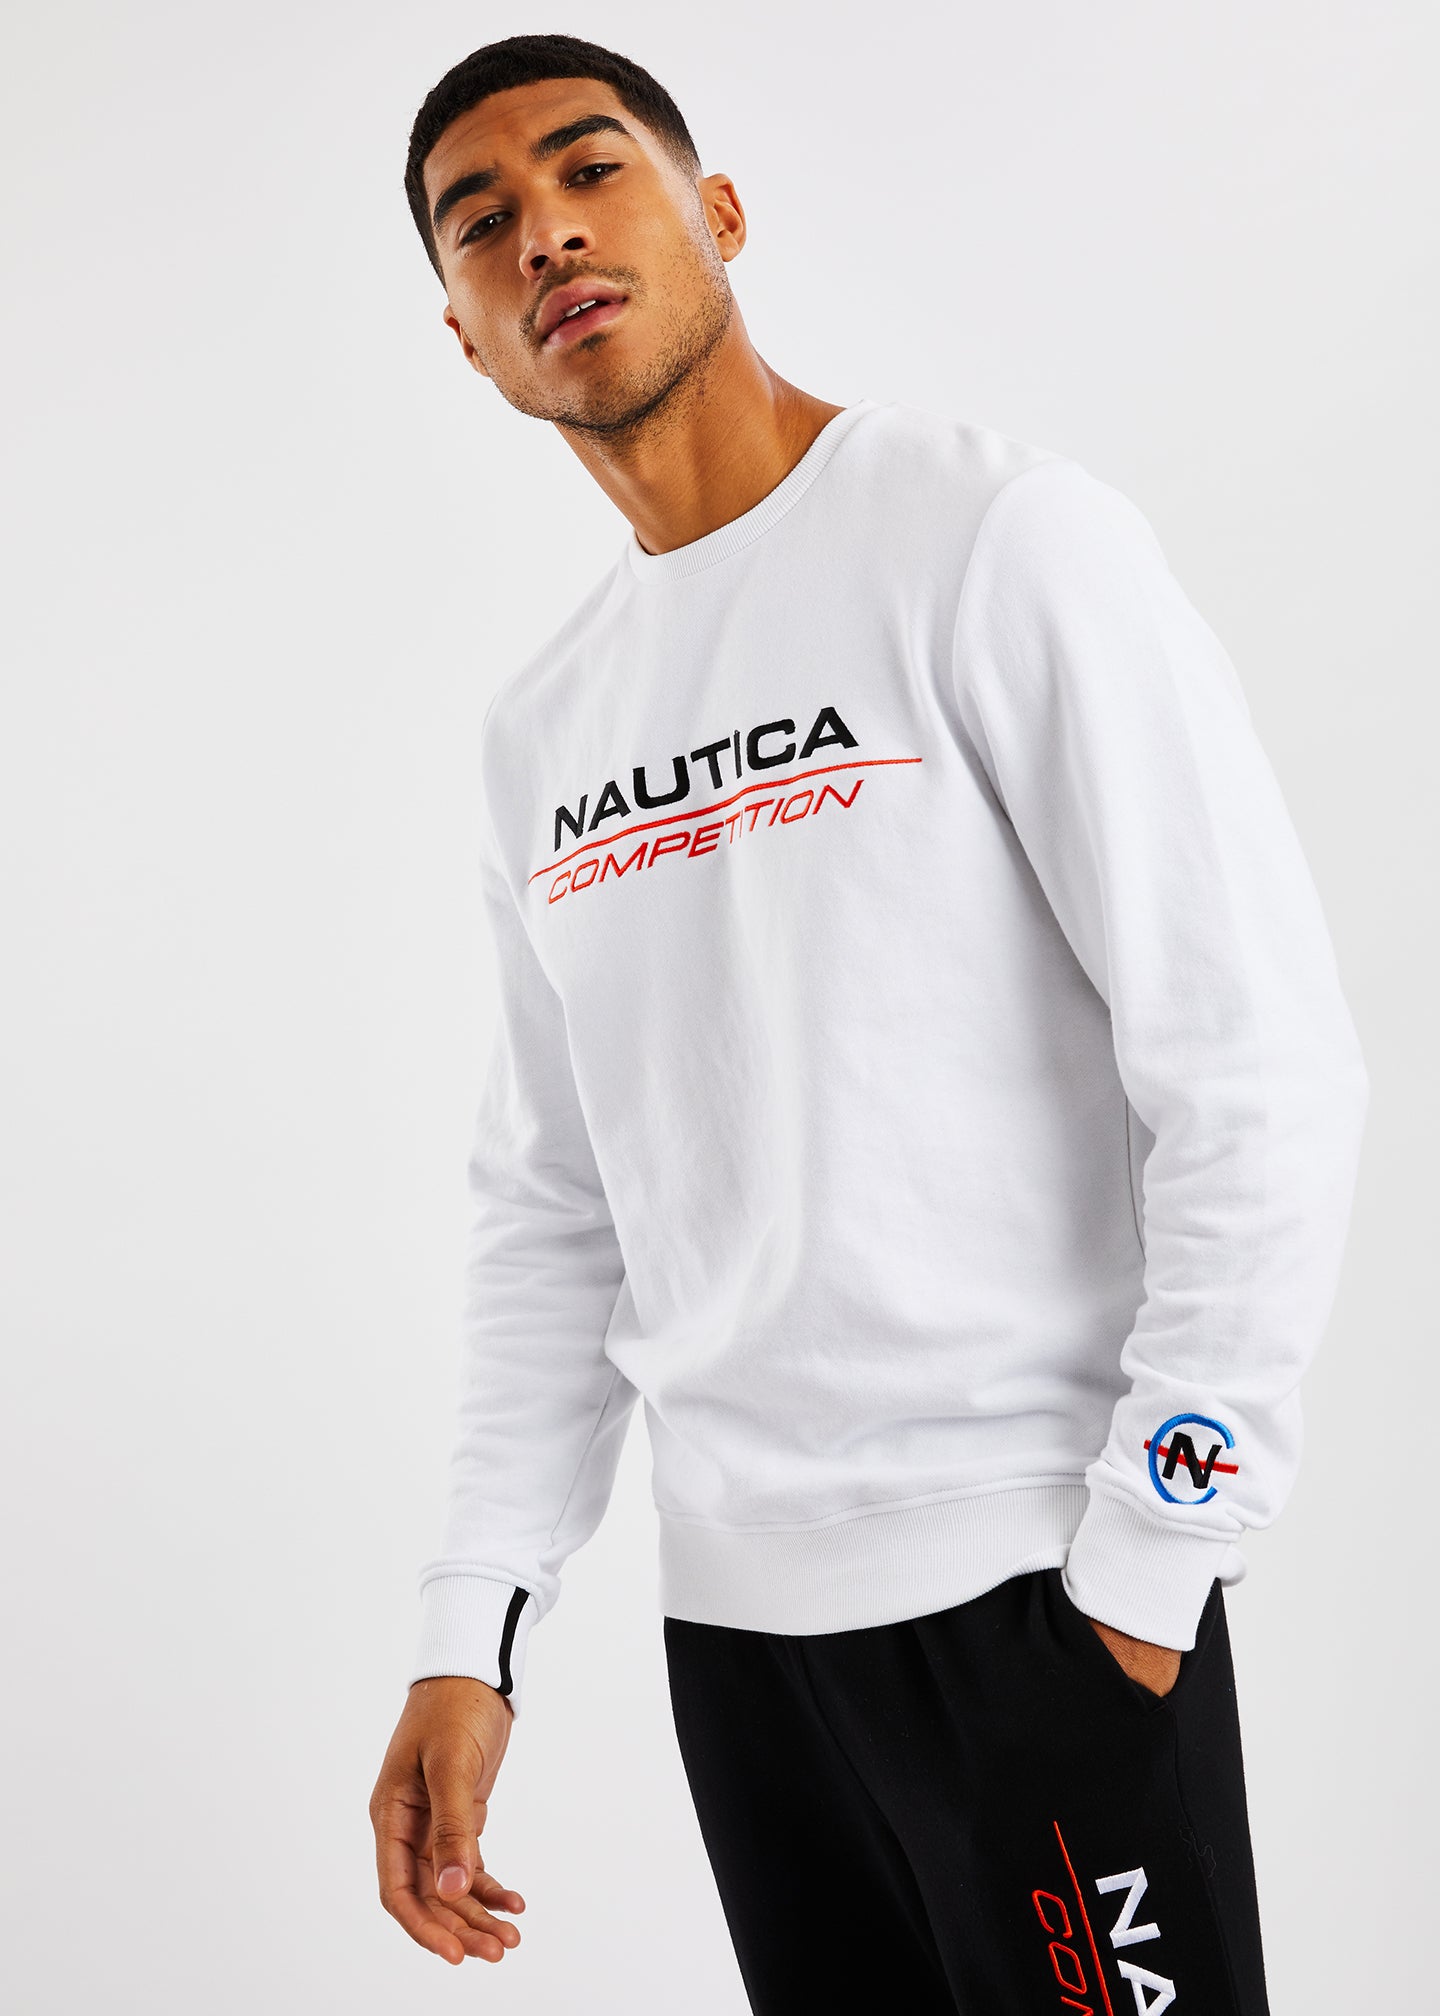 nautica competition sweatshirt